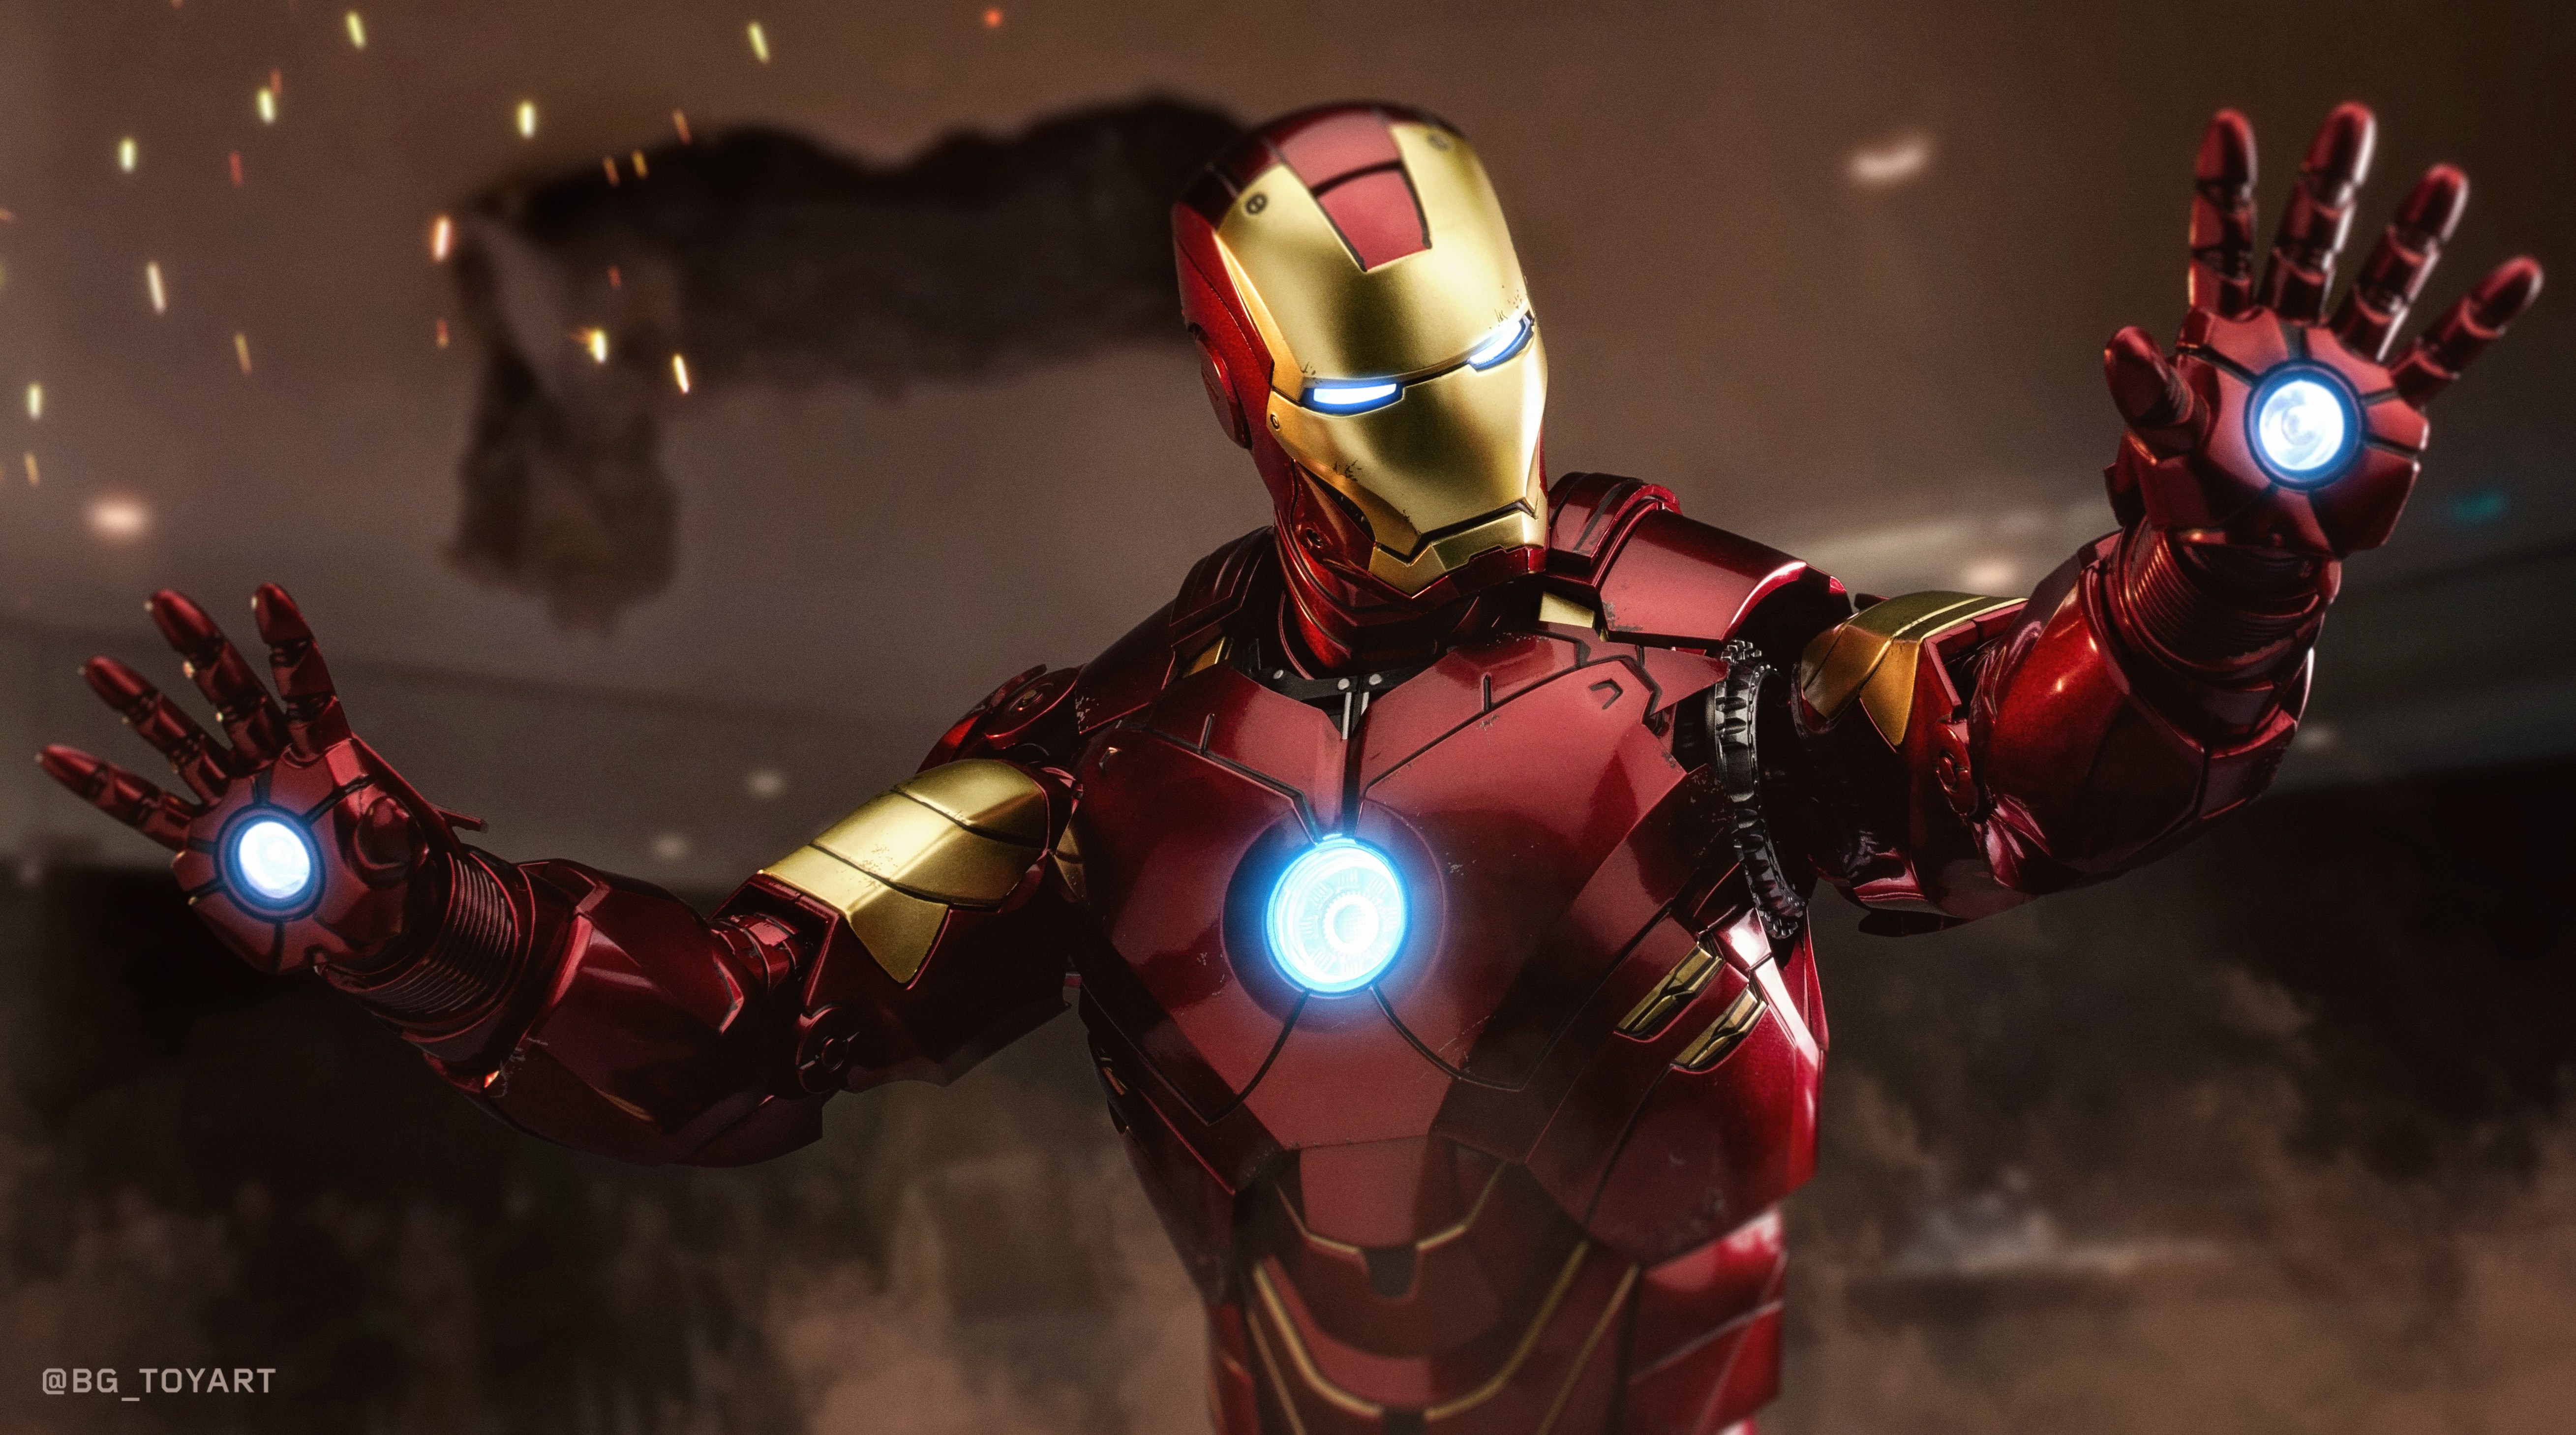 Iron Man 2018 4k 5k, HD Superheroes, 4k Wallpapers, Images ...